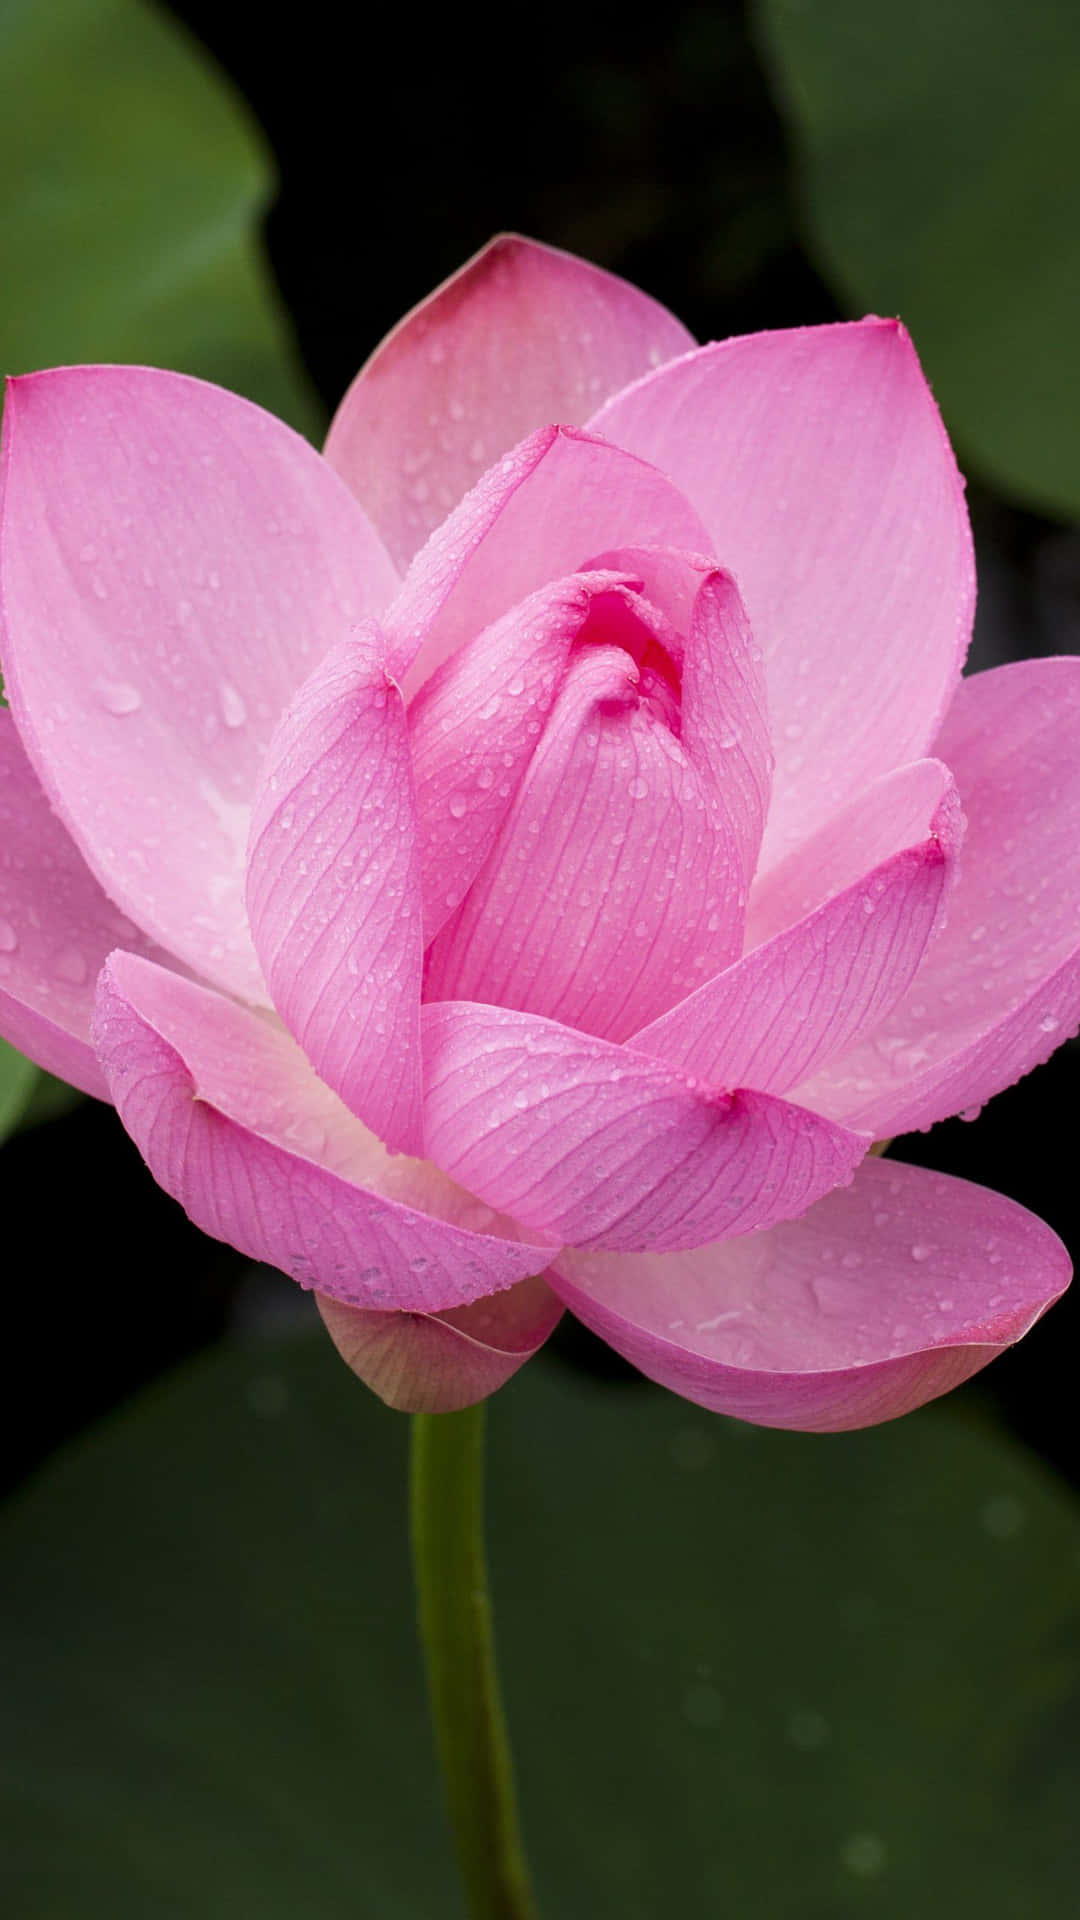 Serene Pink Lotus Flower Blooming on a Calm Lake